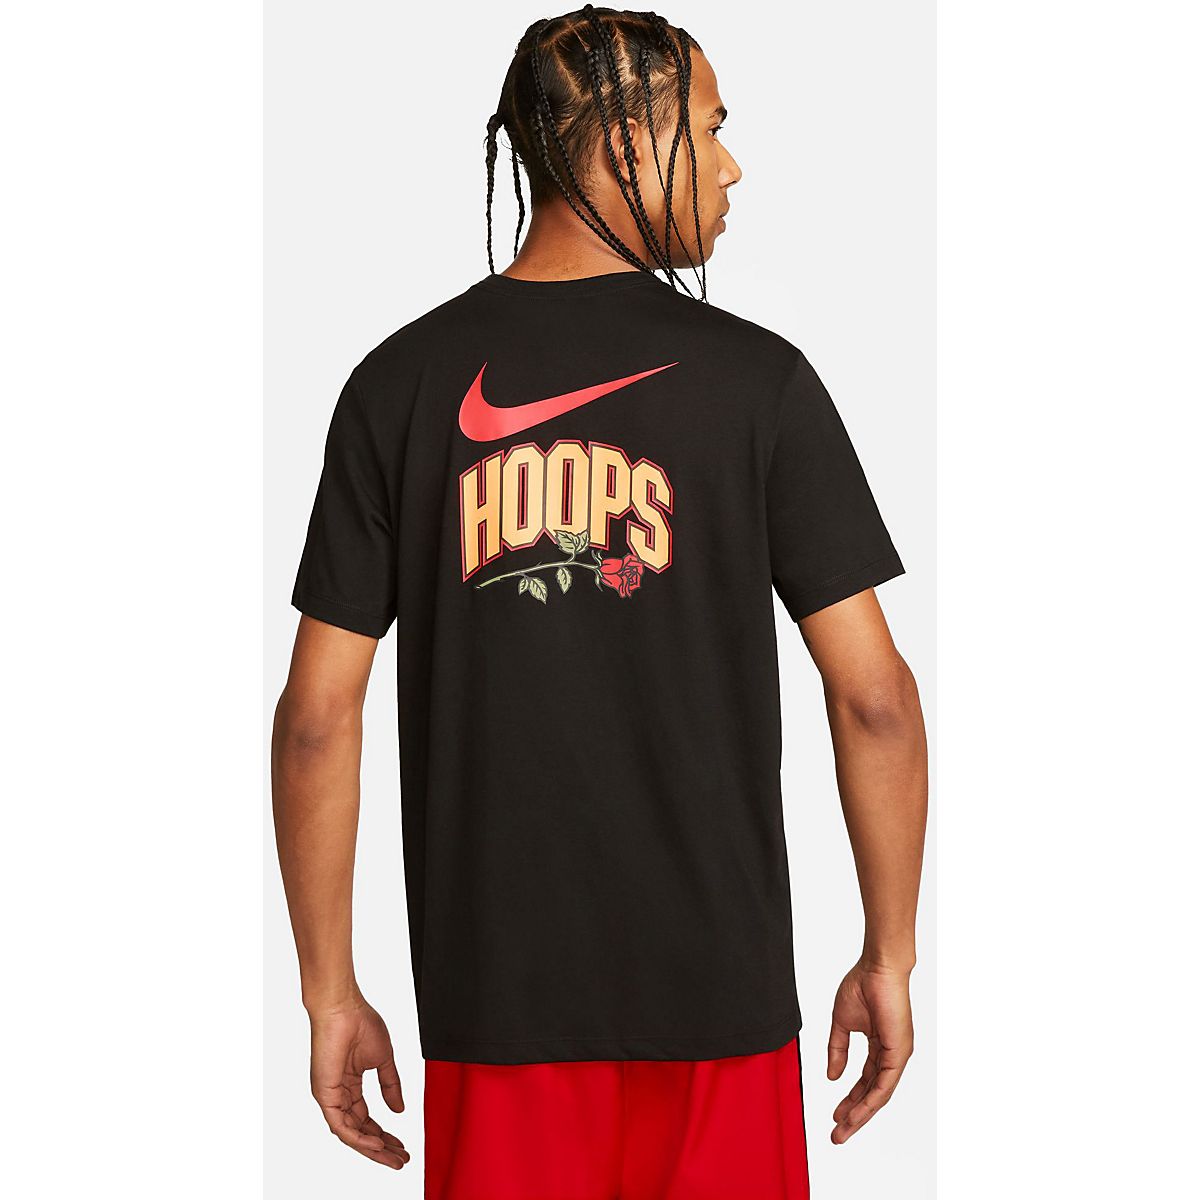 Nike Men's Dri-FIT Basketball T-shirt | Free Shipping at Academy